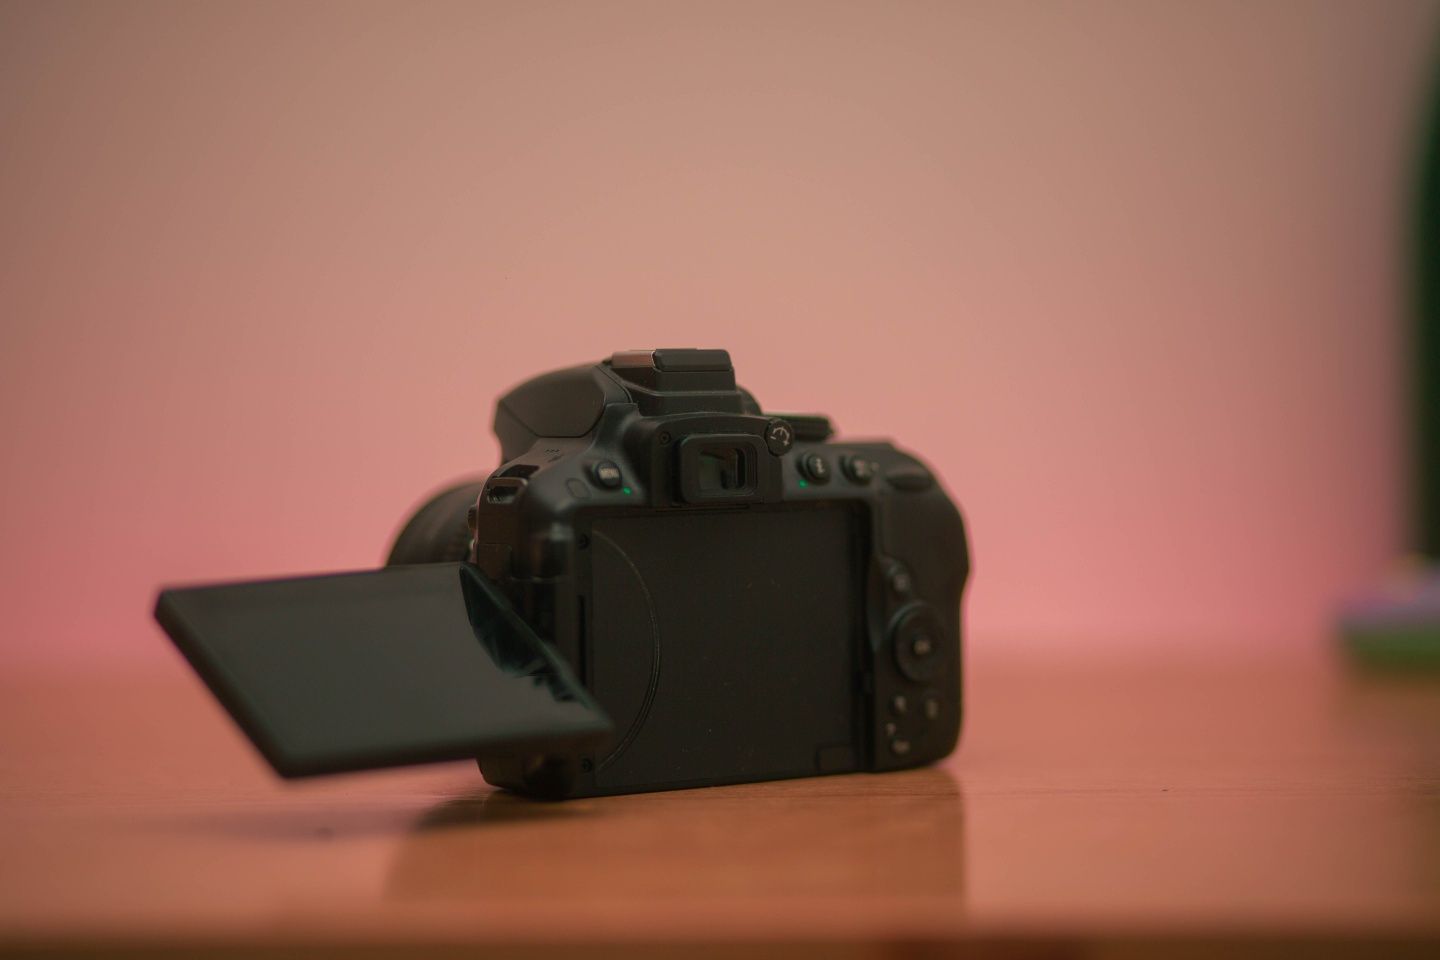 Nikon D5300 + 70-300mm sigma